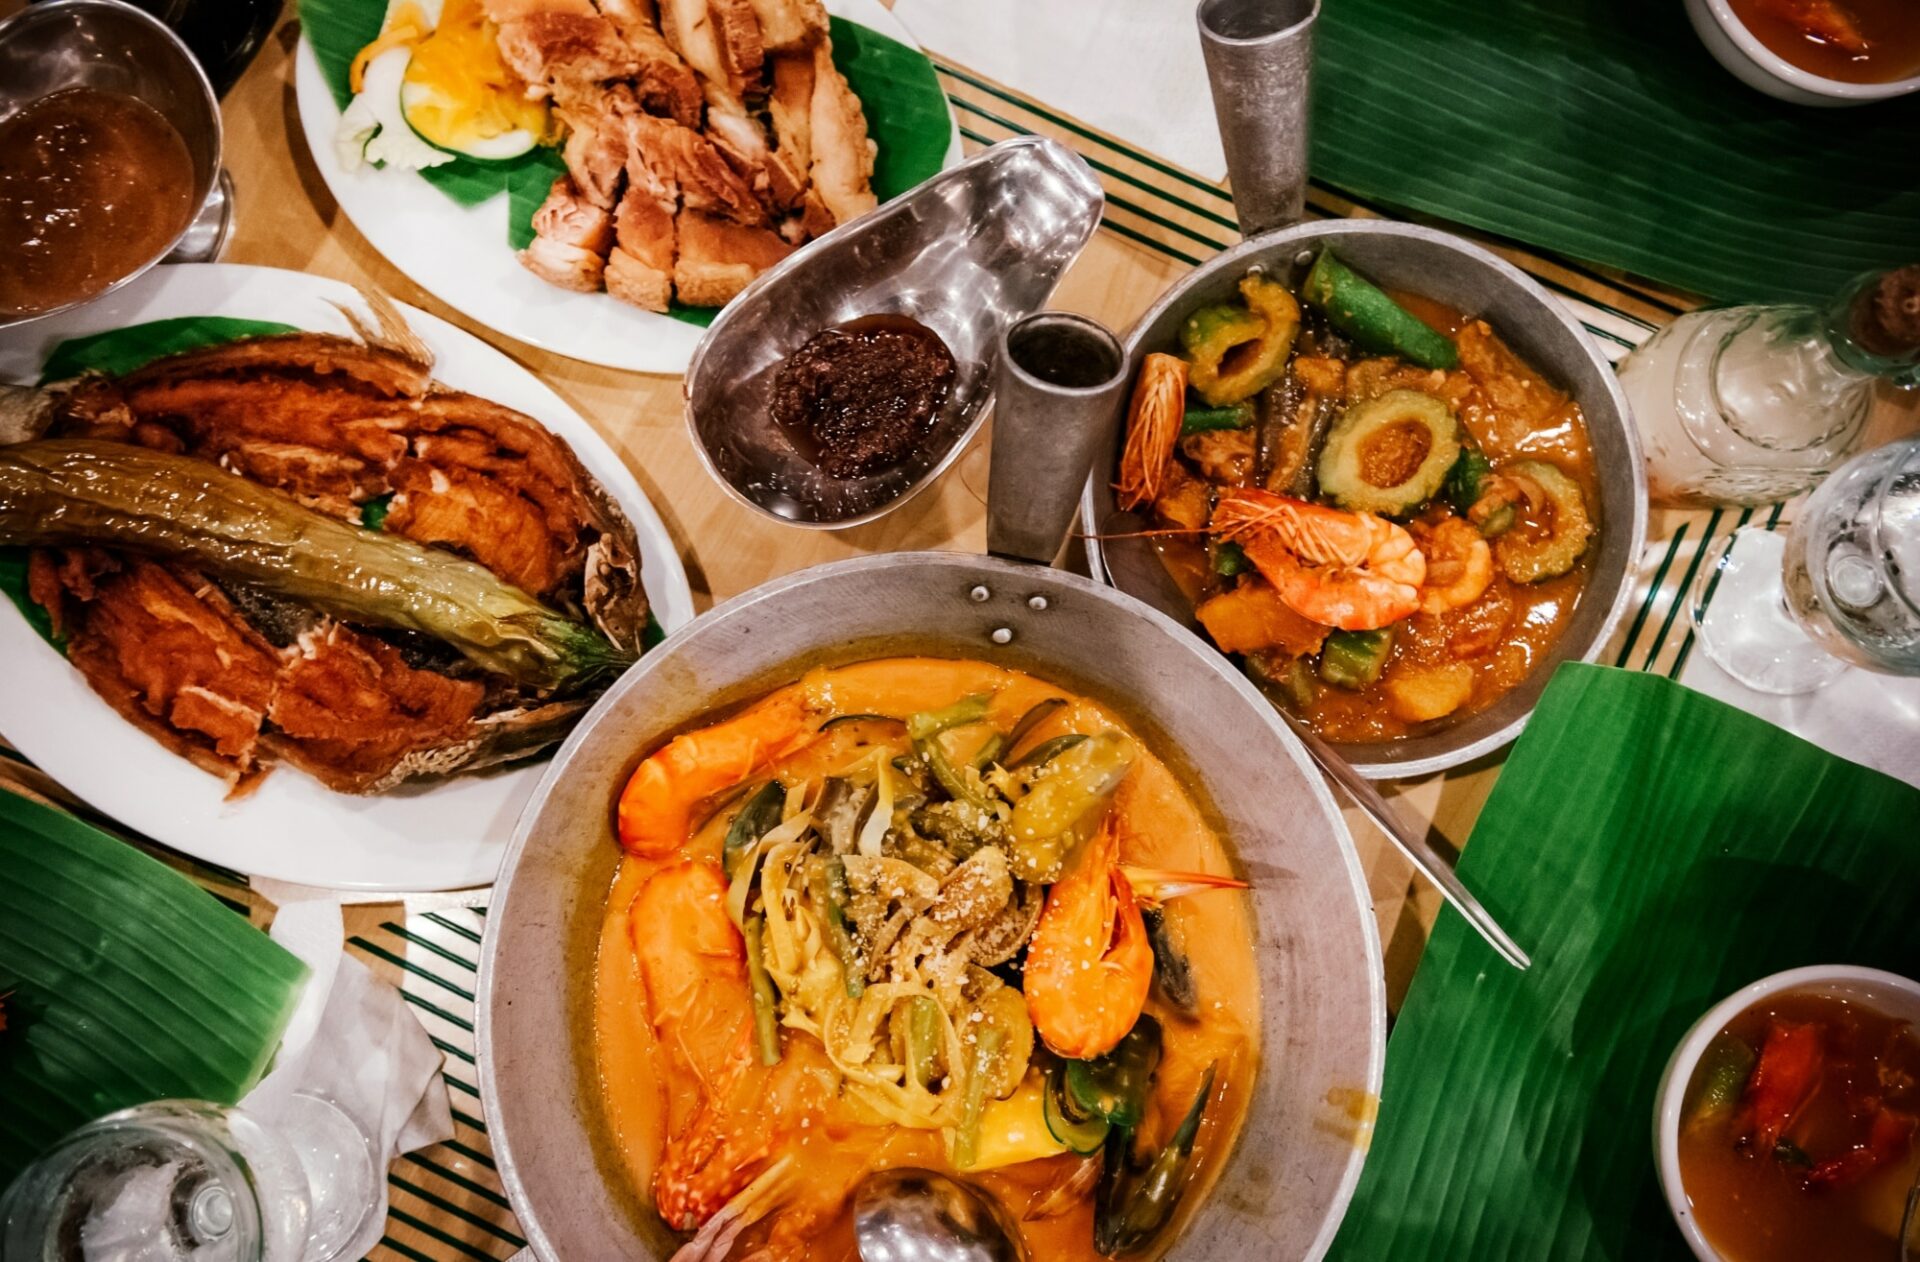 Meal set of various traditional Filippino dishes: Pakbet, lechon kawali, Bale Dutung.